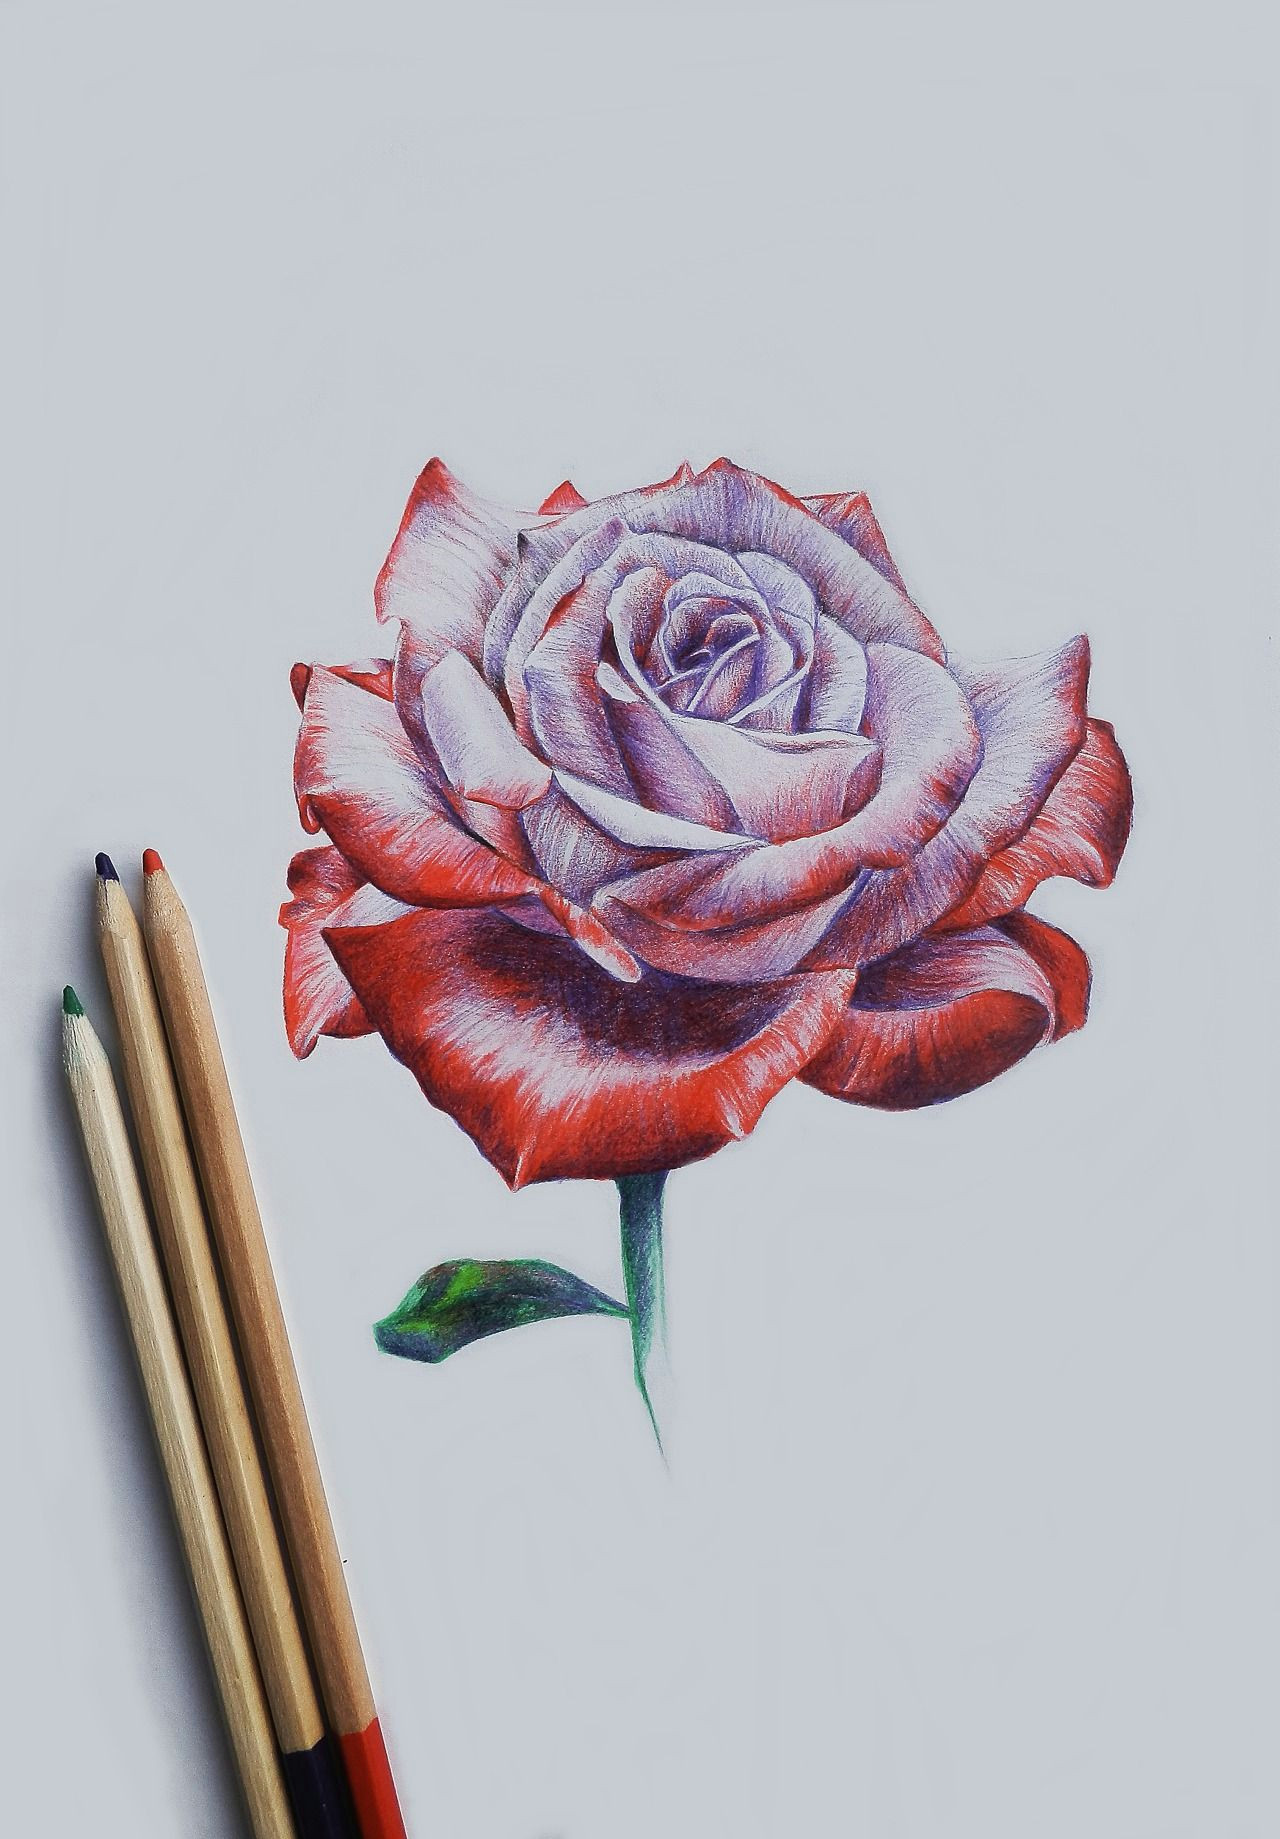 3d Pencil Drawings Of Roses Drawing Rose More Painting Pinterest Drawings Art and Pencil Art